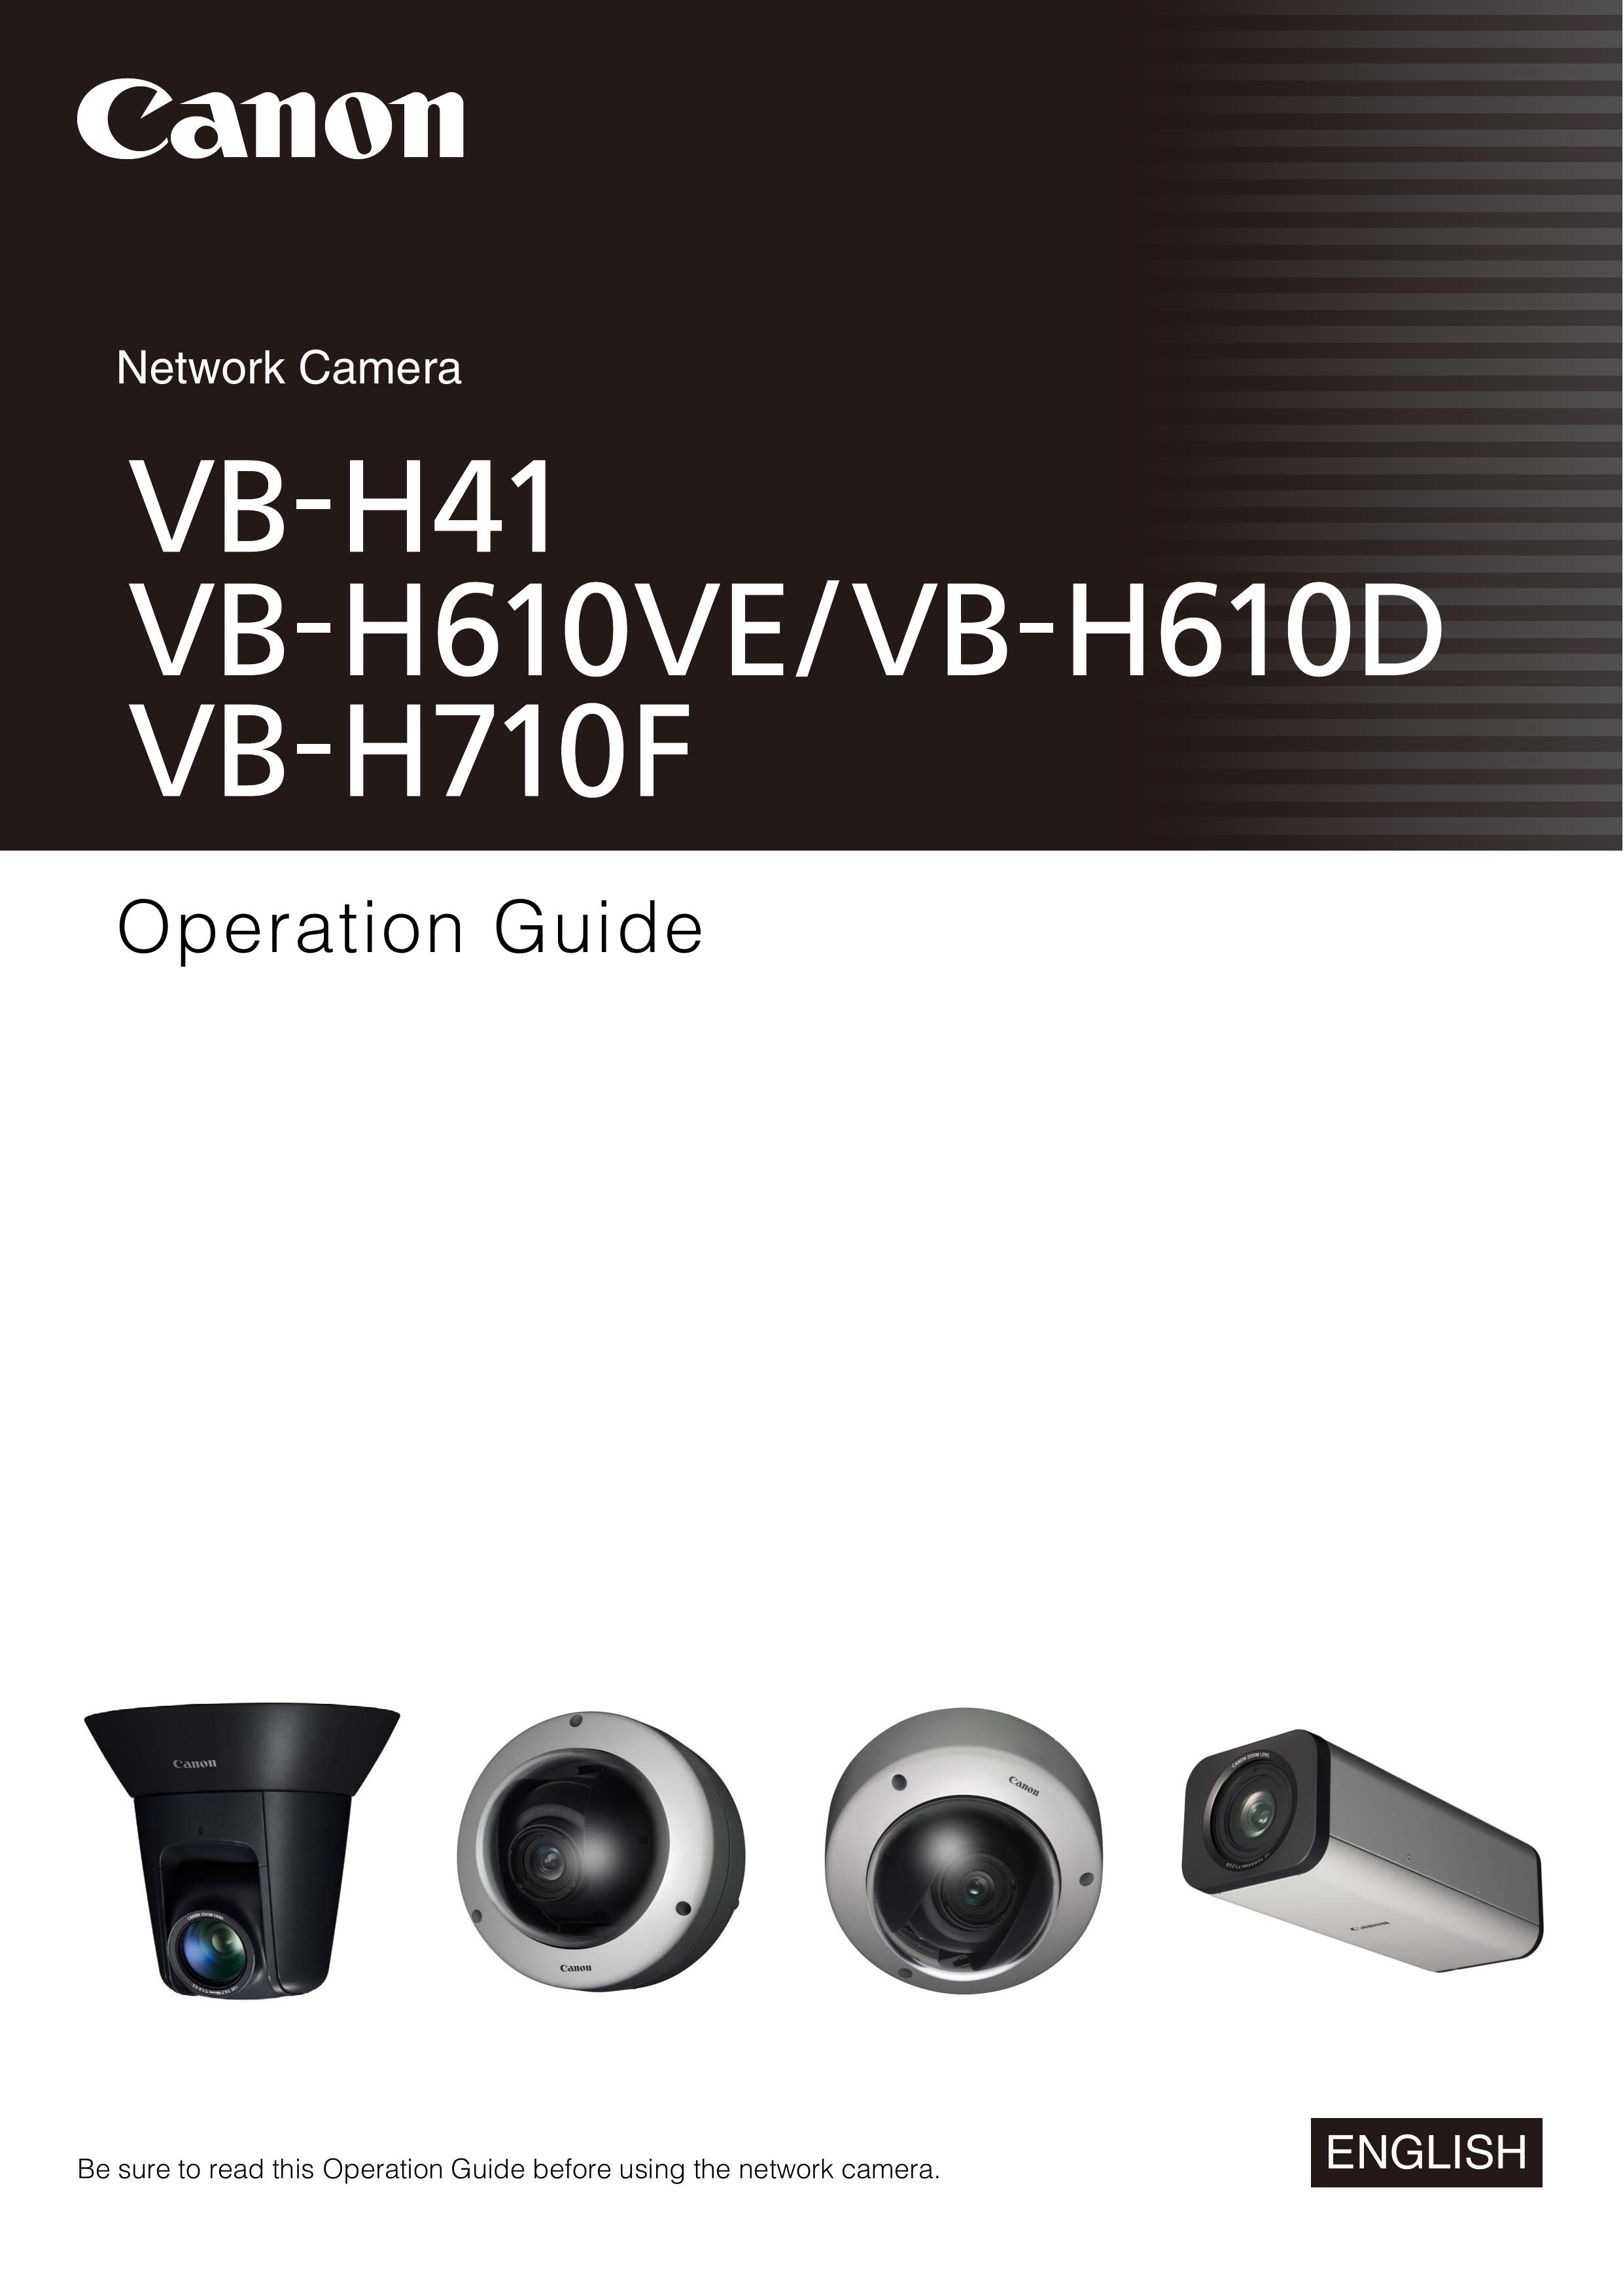 Canon VB-H41 Security Camera User Manual